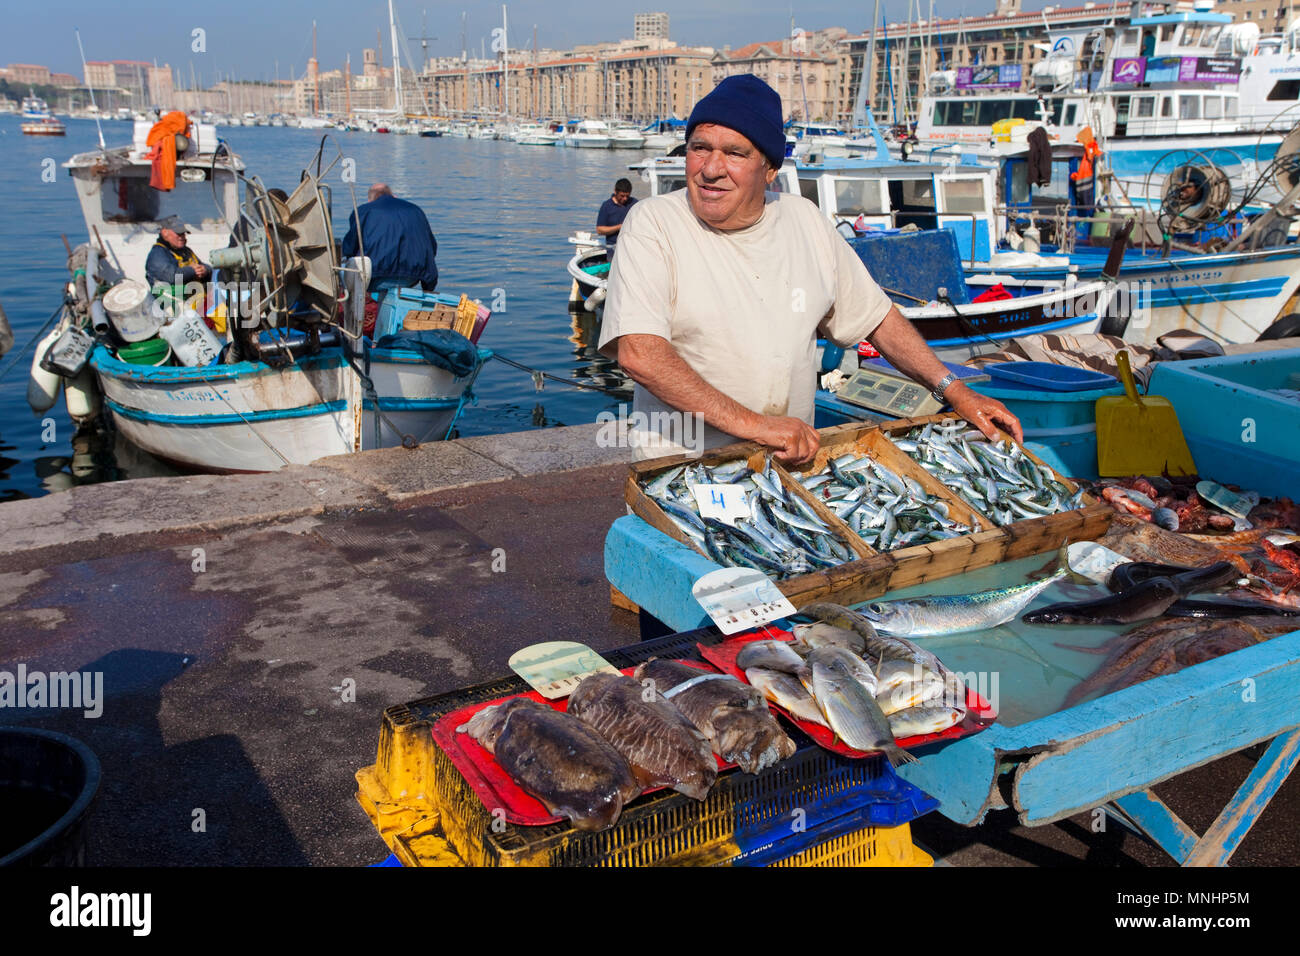 Fisherman selling fish at harbour Vieux Port, Marseille, Bouches-du-Rhone, Provence-Alpes-Côte d’Azur, South France, France, Europe Stock Photo